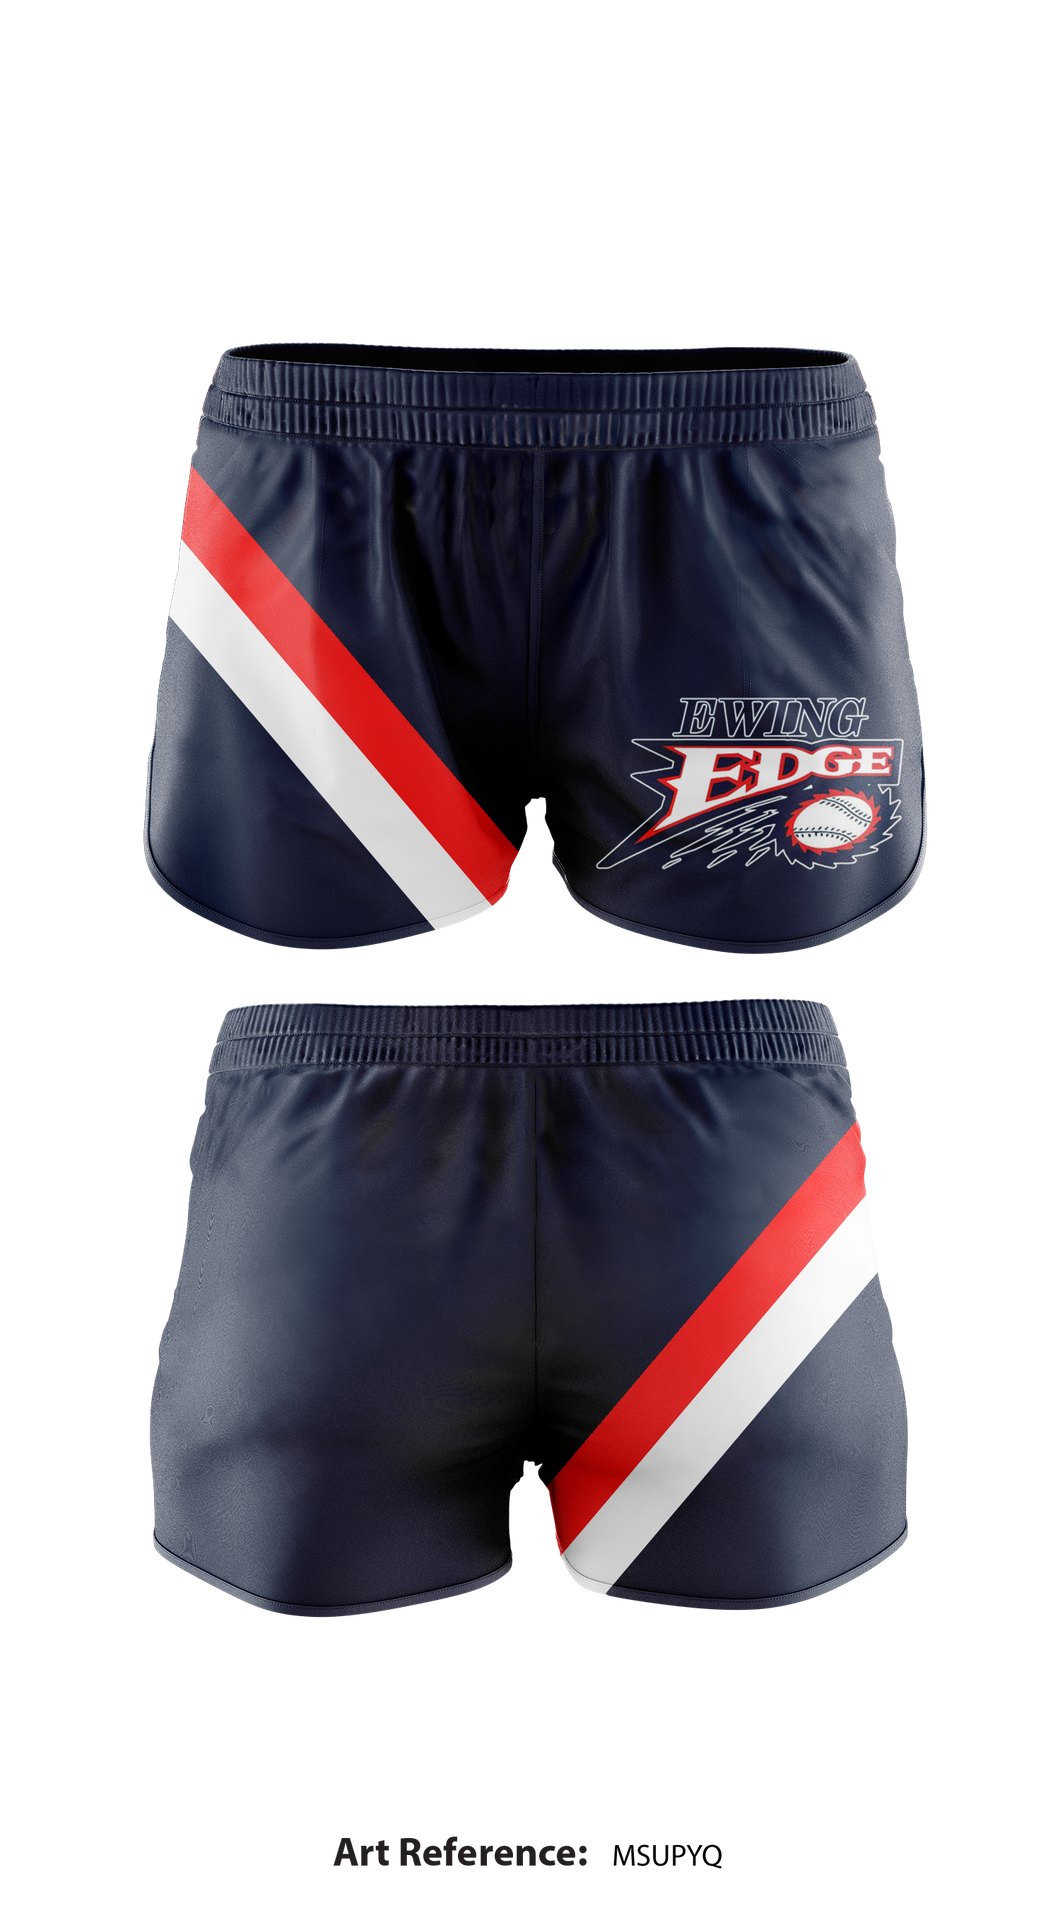 Ewing Edge Softball 81004704 Women's Shorts - 2